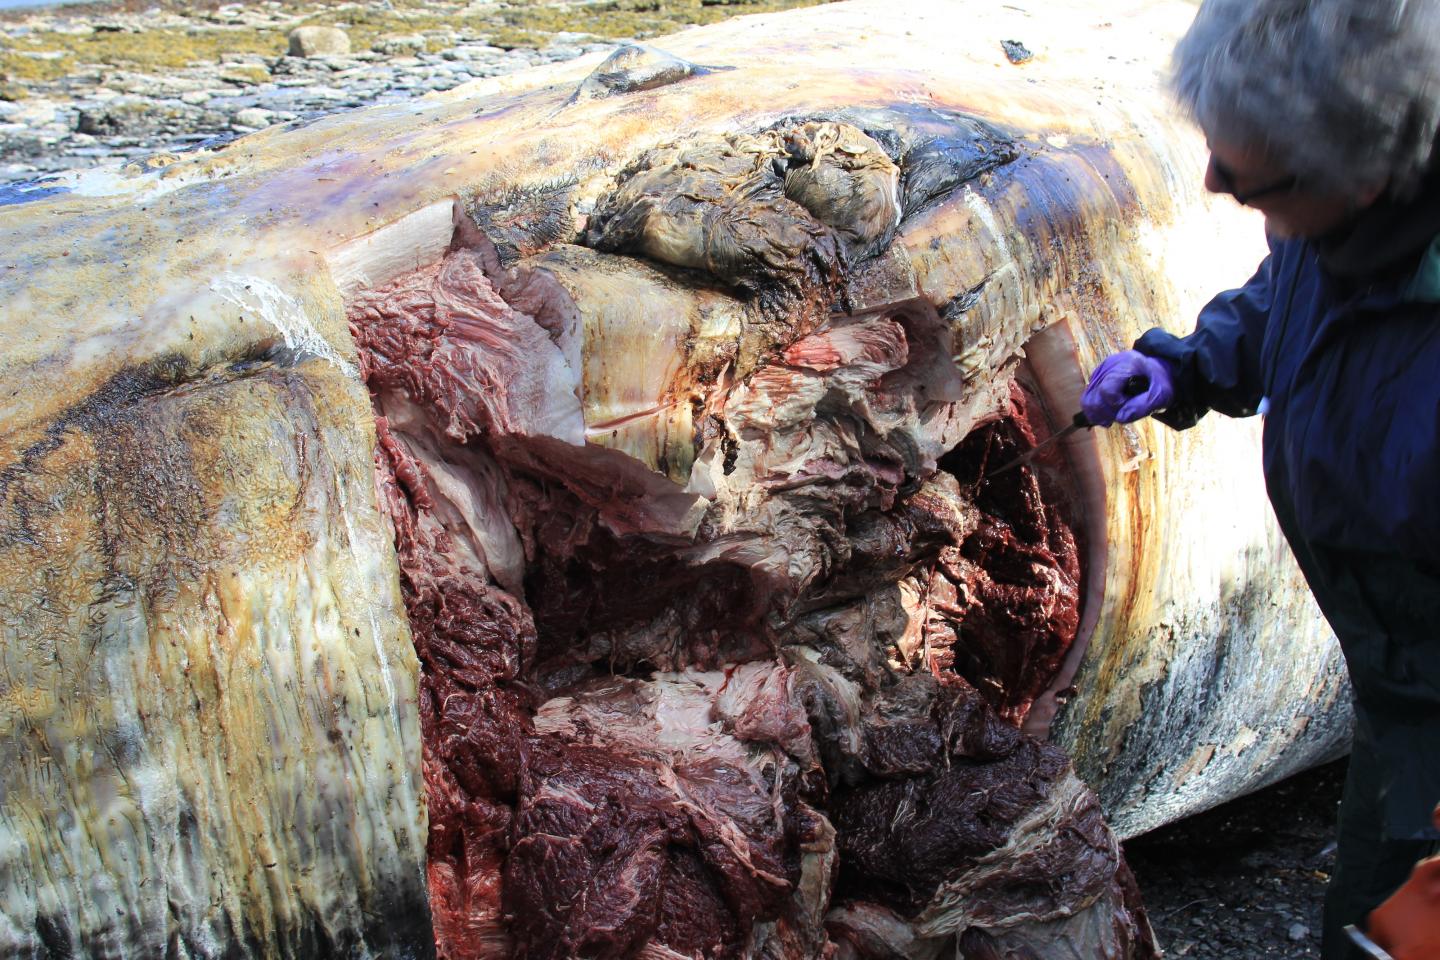 Fin Whale Carcass